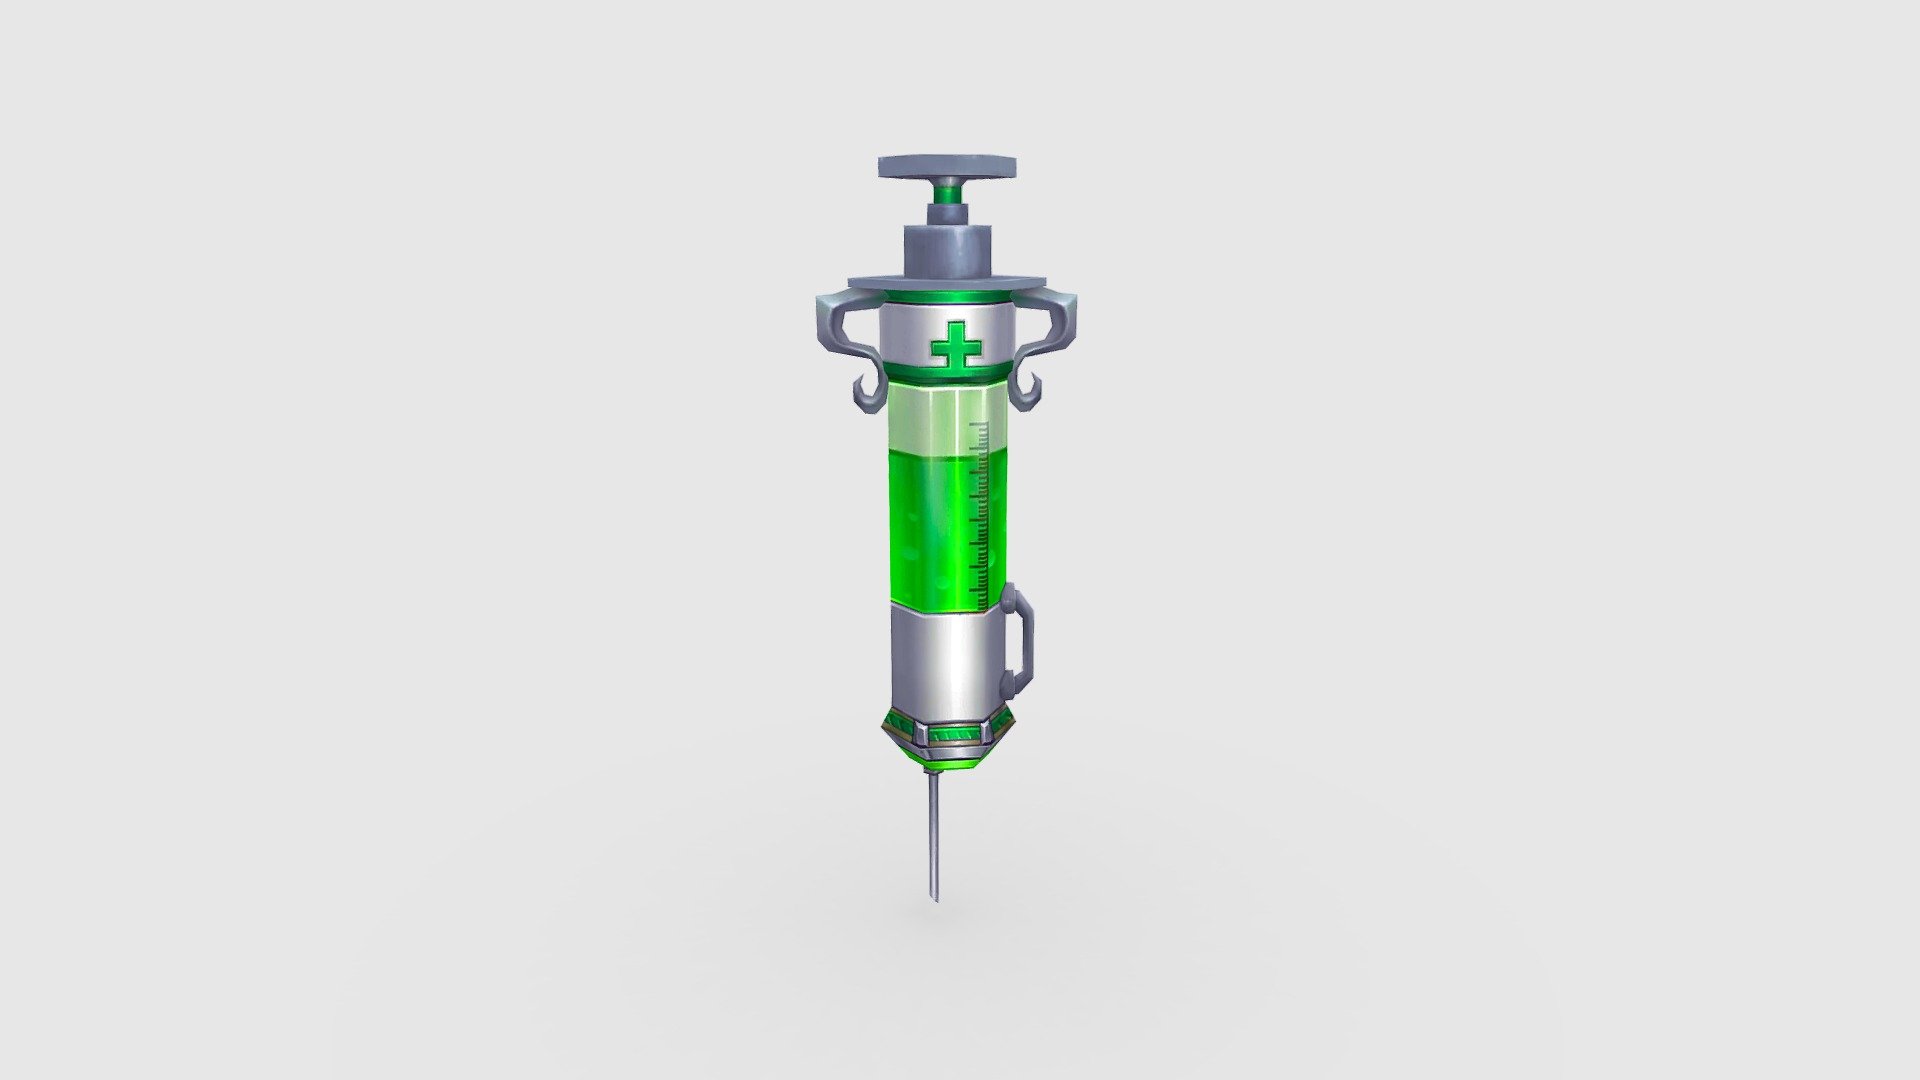 Cartoon syringe - green Low-poly 3D model - Cartoon syringe - green - 3D model by ler_cartoon (@lerrrrr) 3d model